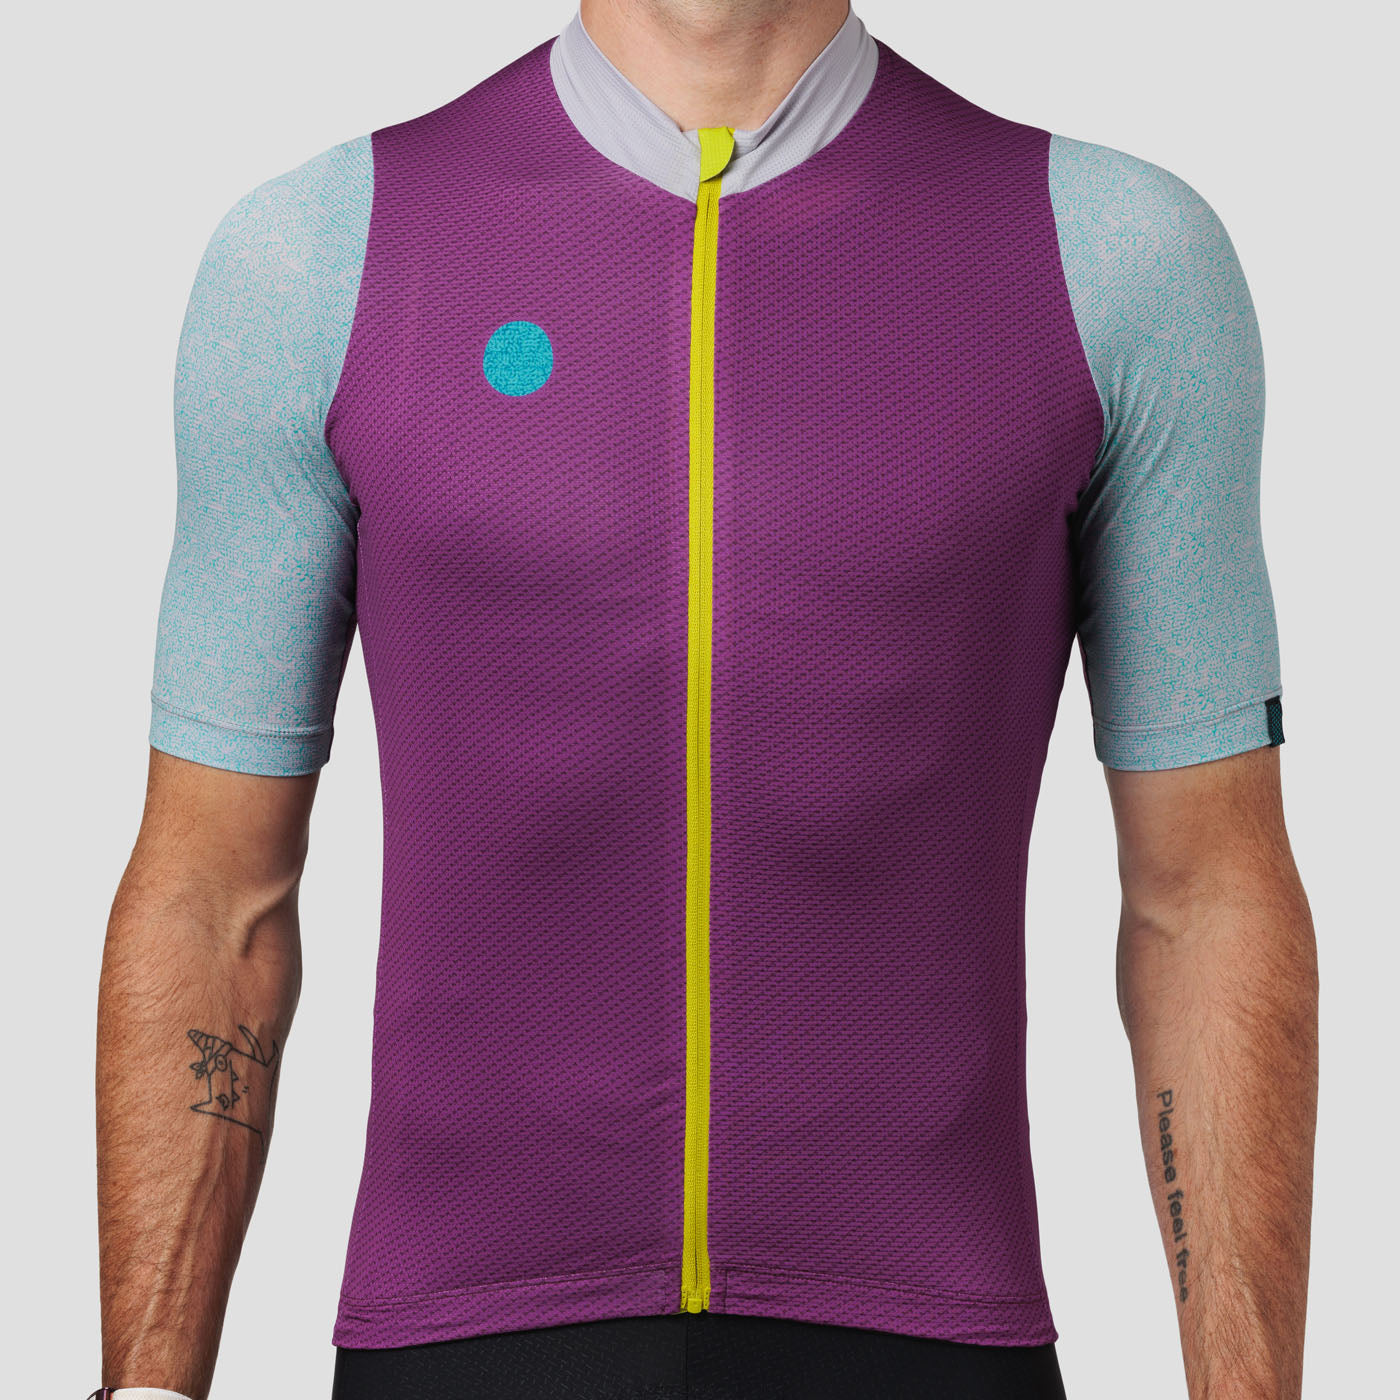 Ornot Cycling Jerseys – Ornot Online Store